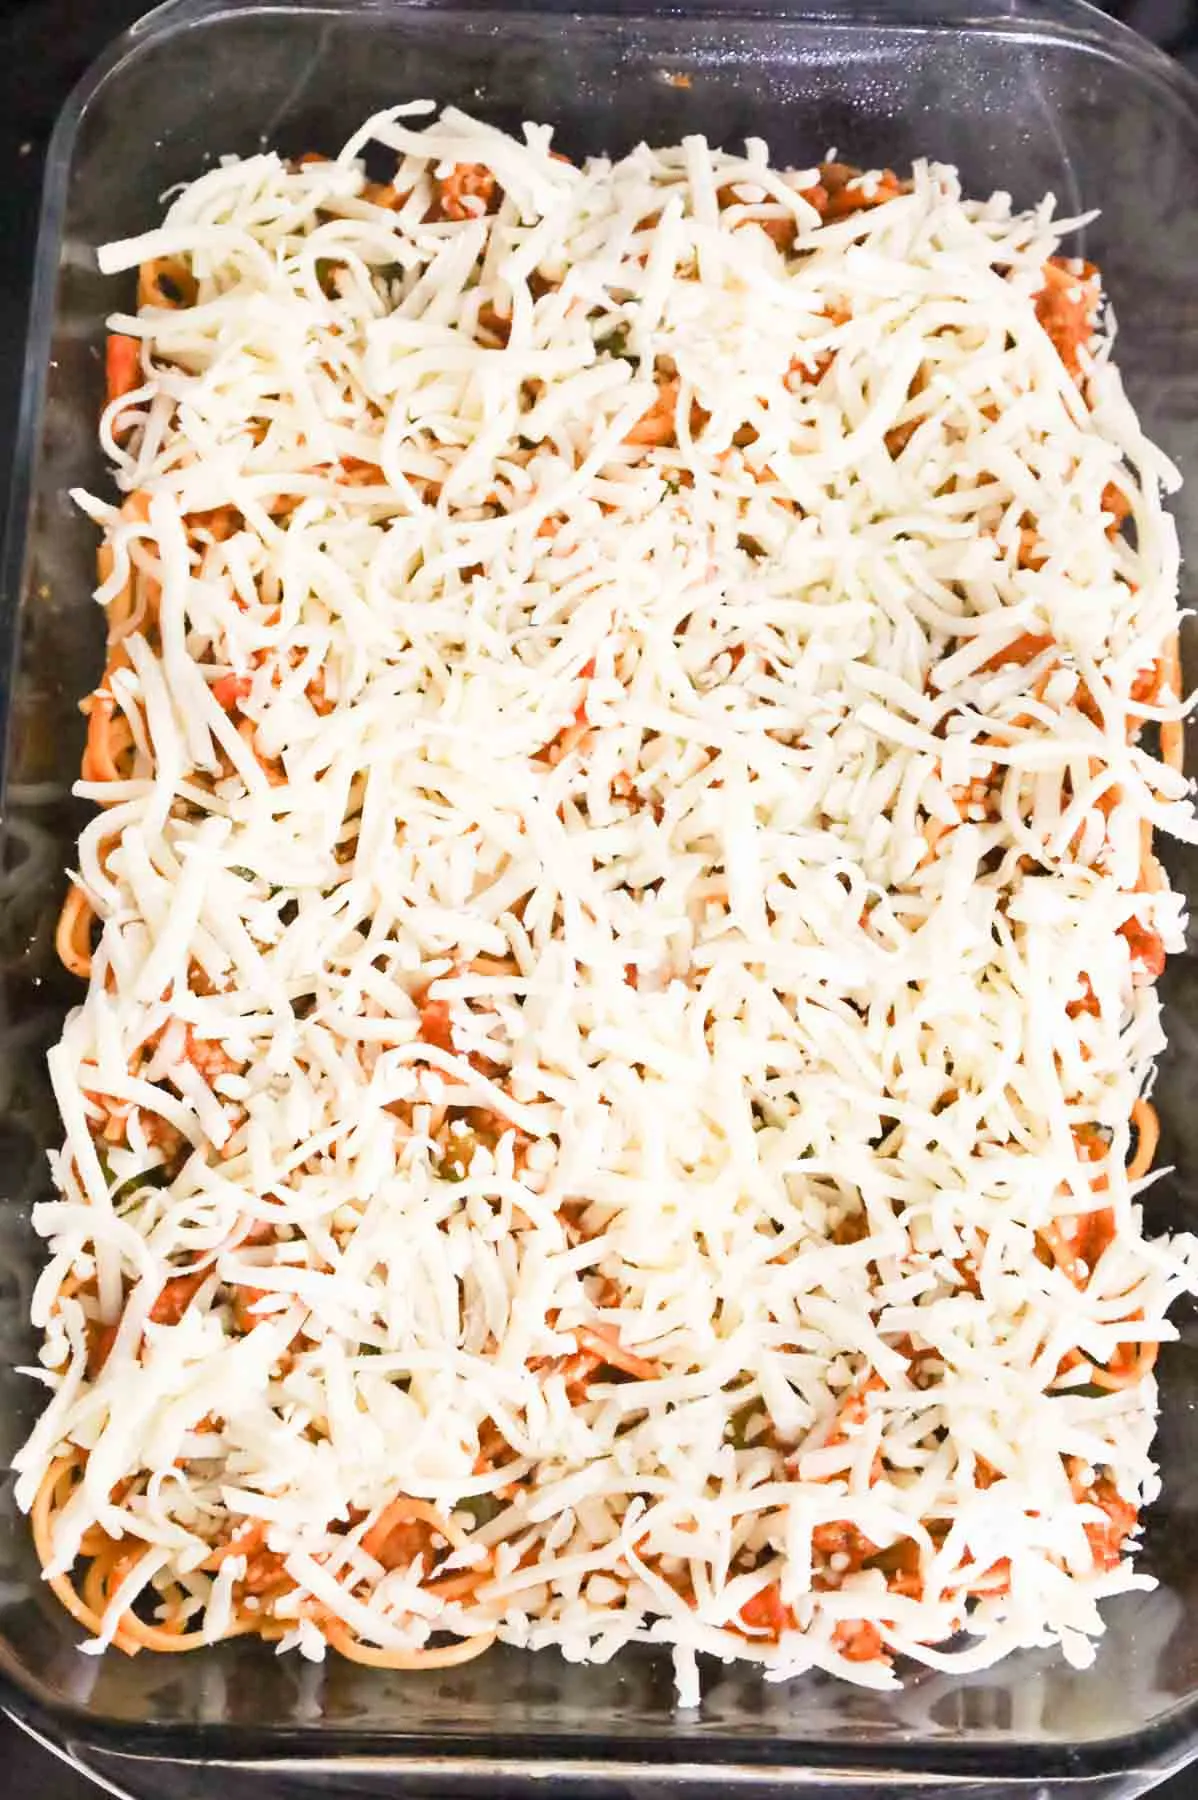 shredded mozzarella on top of spaghetti in a baking dish